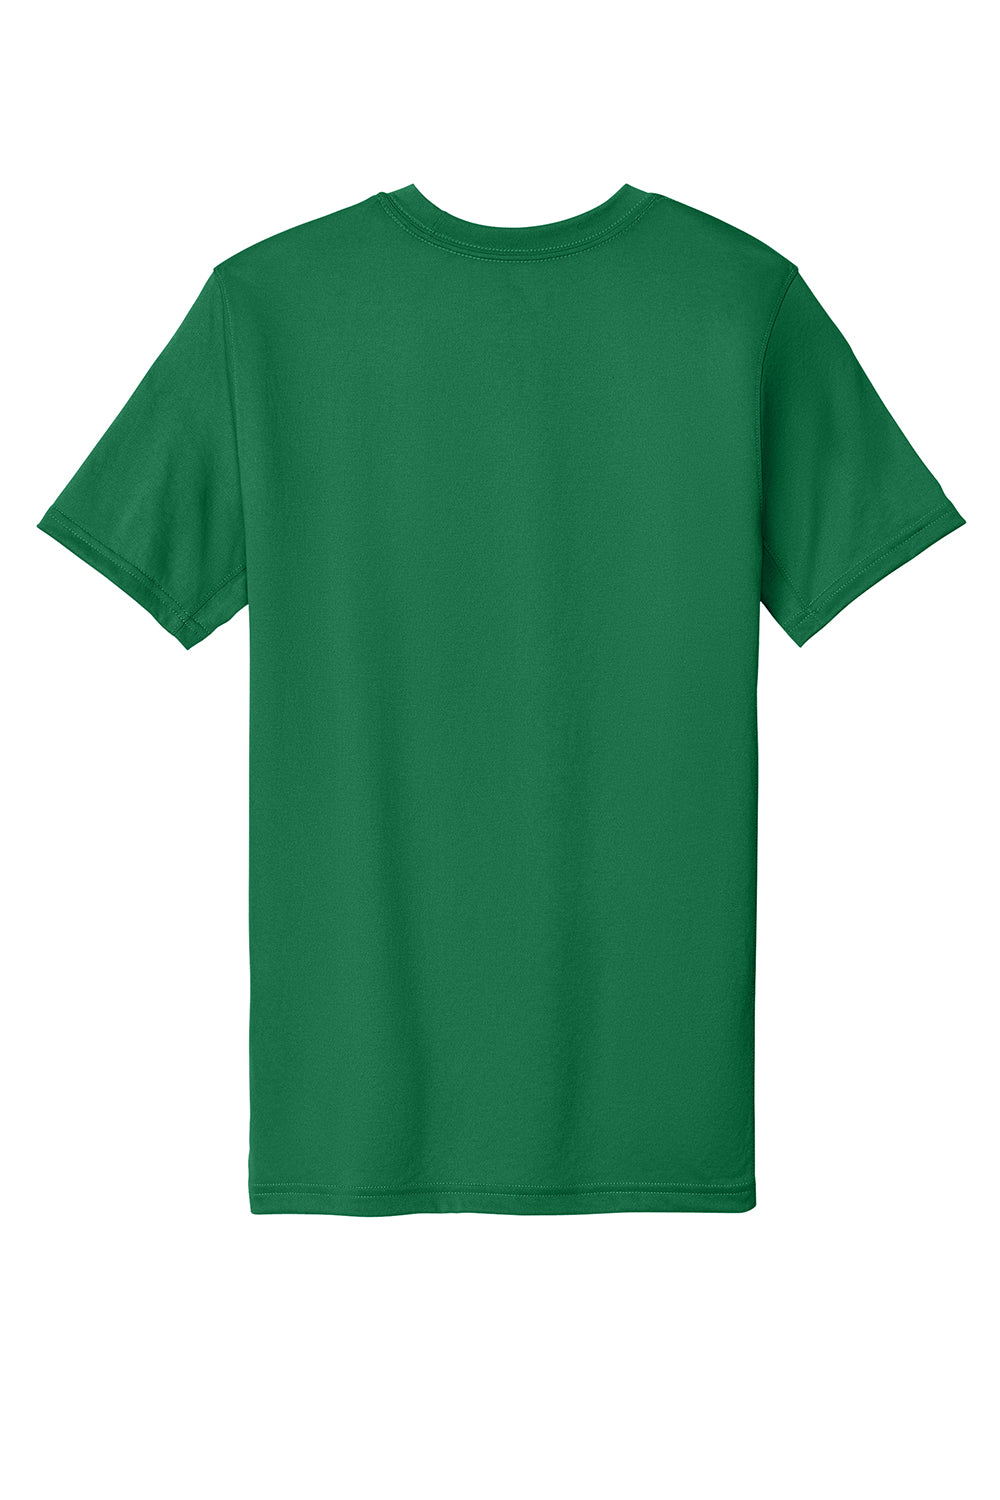 Nike NKDX8730 Mens rLegend Dri-Fit Moisture Wicking Short Sleeve Crewneck T-Shirt Gorge Green Flat Back